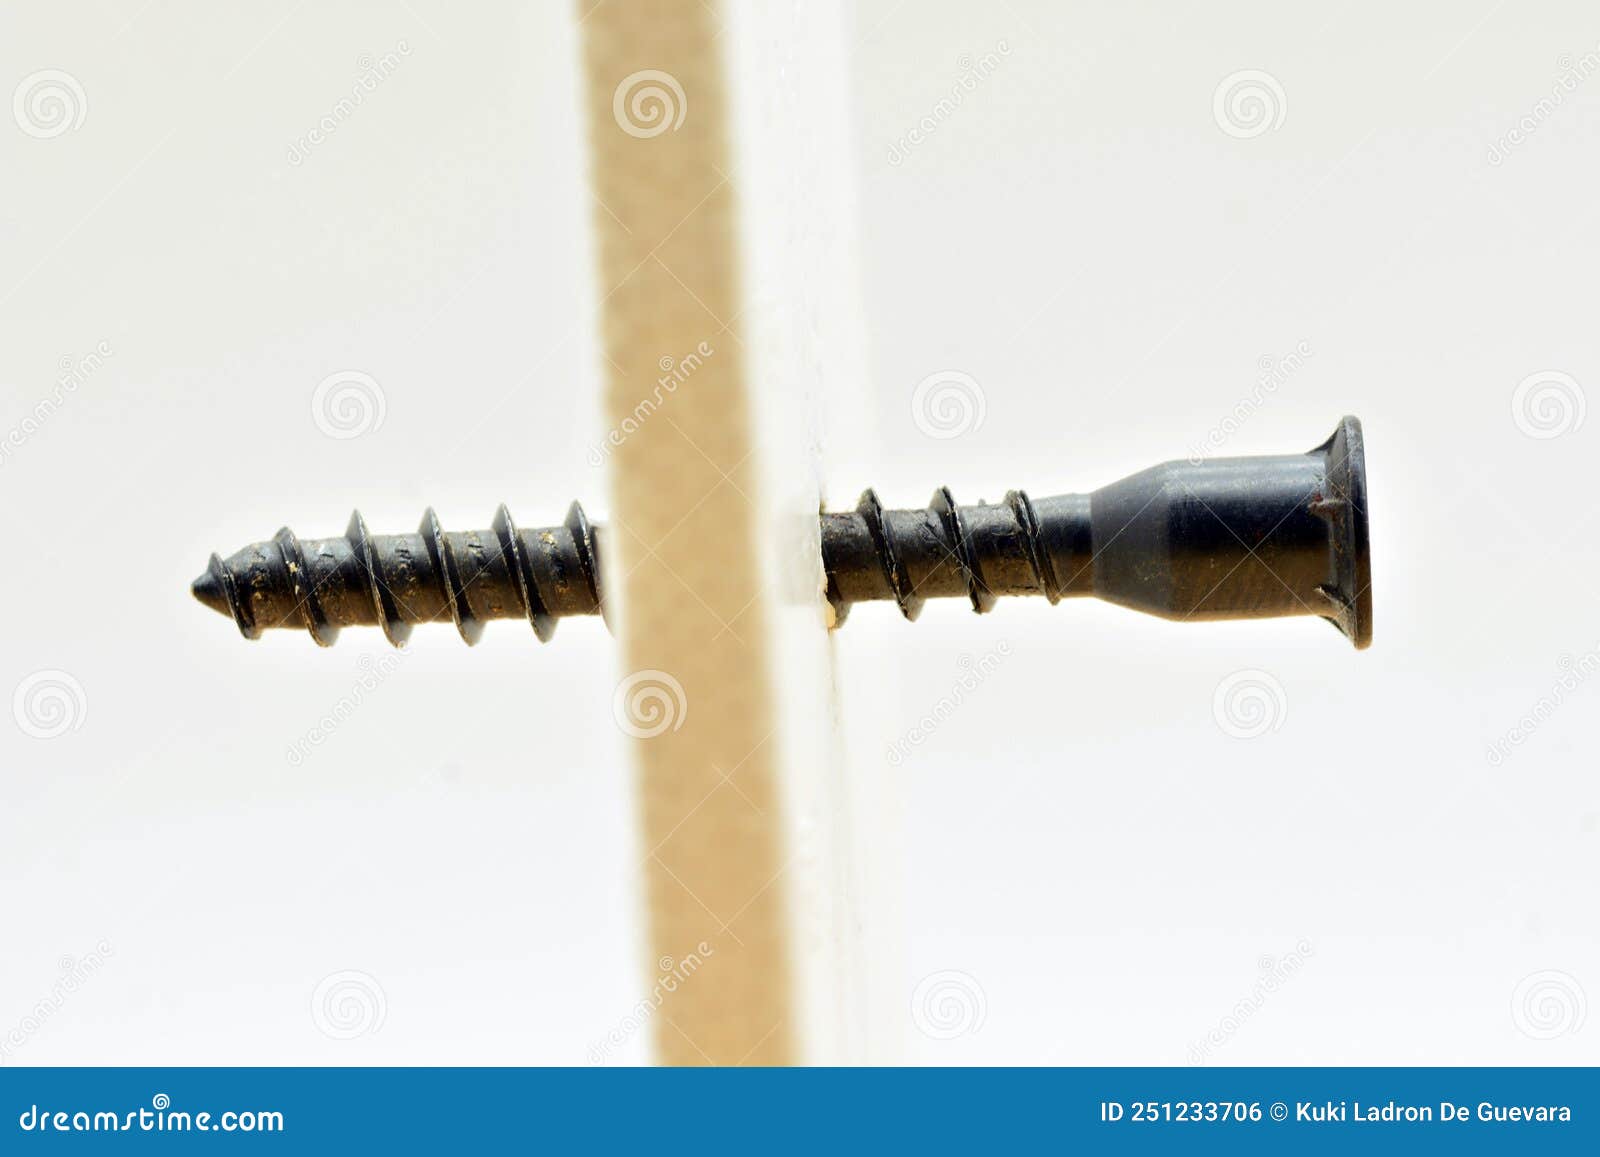 detail of a screw going through a wall